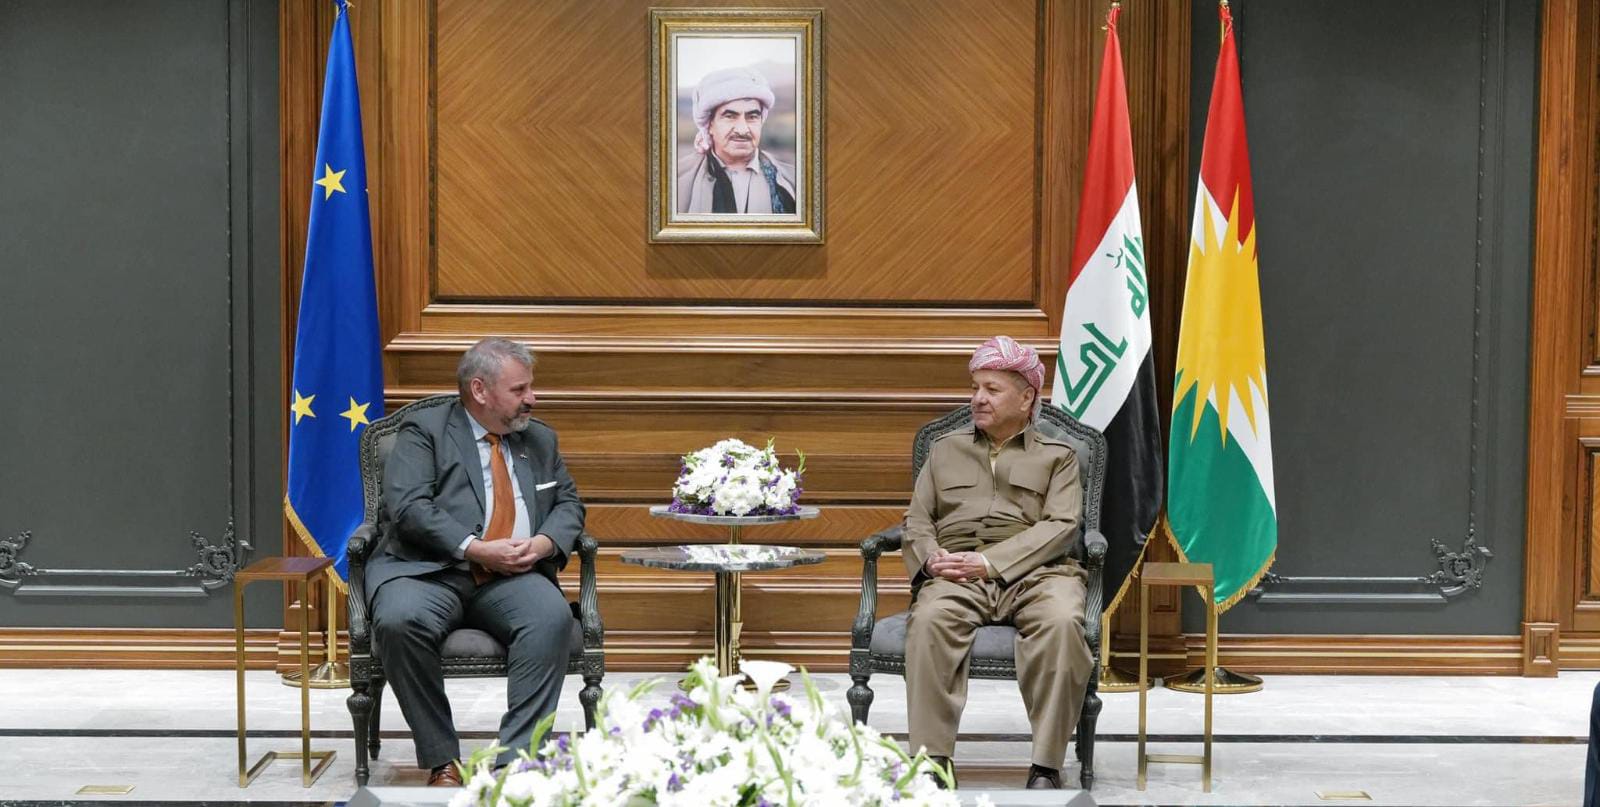 Leader Barzani urges "fair and transparent" elections in Kurdistan